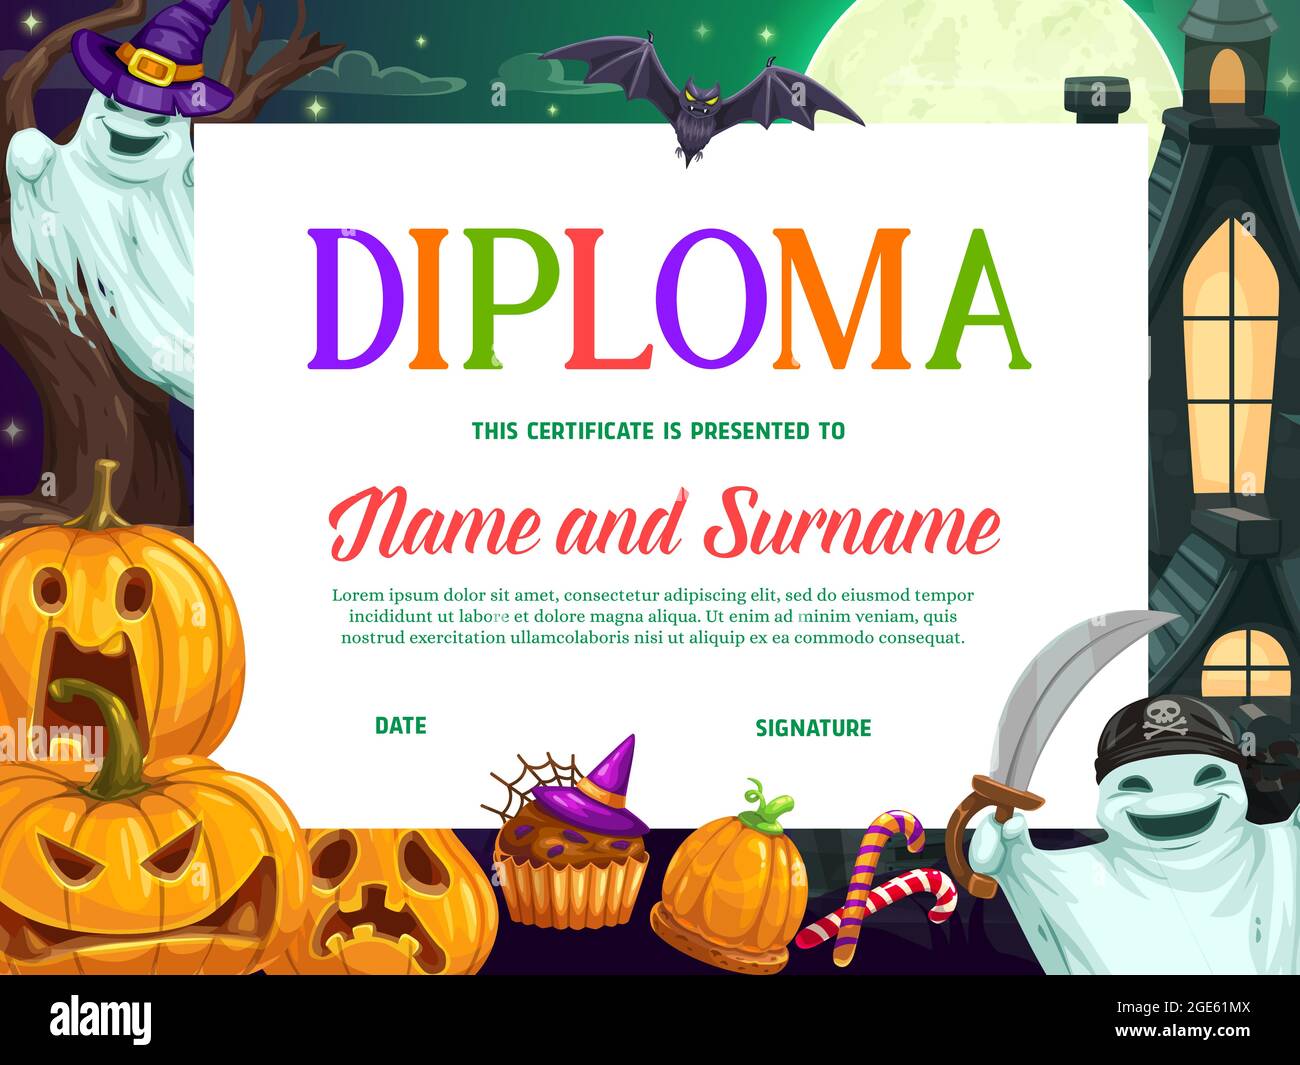 Halloween Certificate Diploma Halloween High Resolution Stock Within Halloween Certificate Template